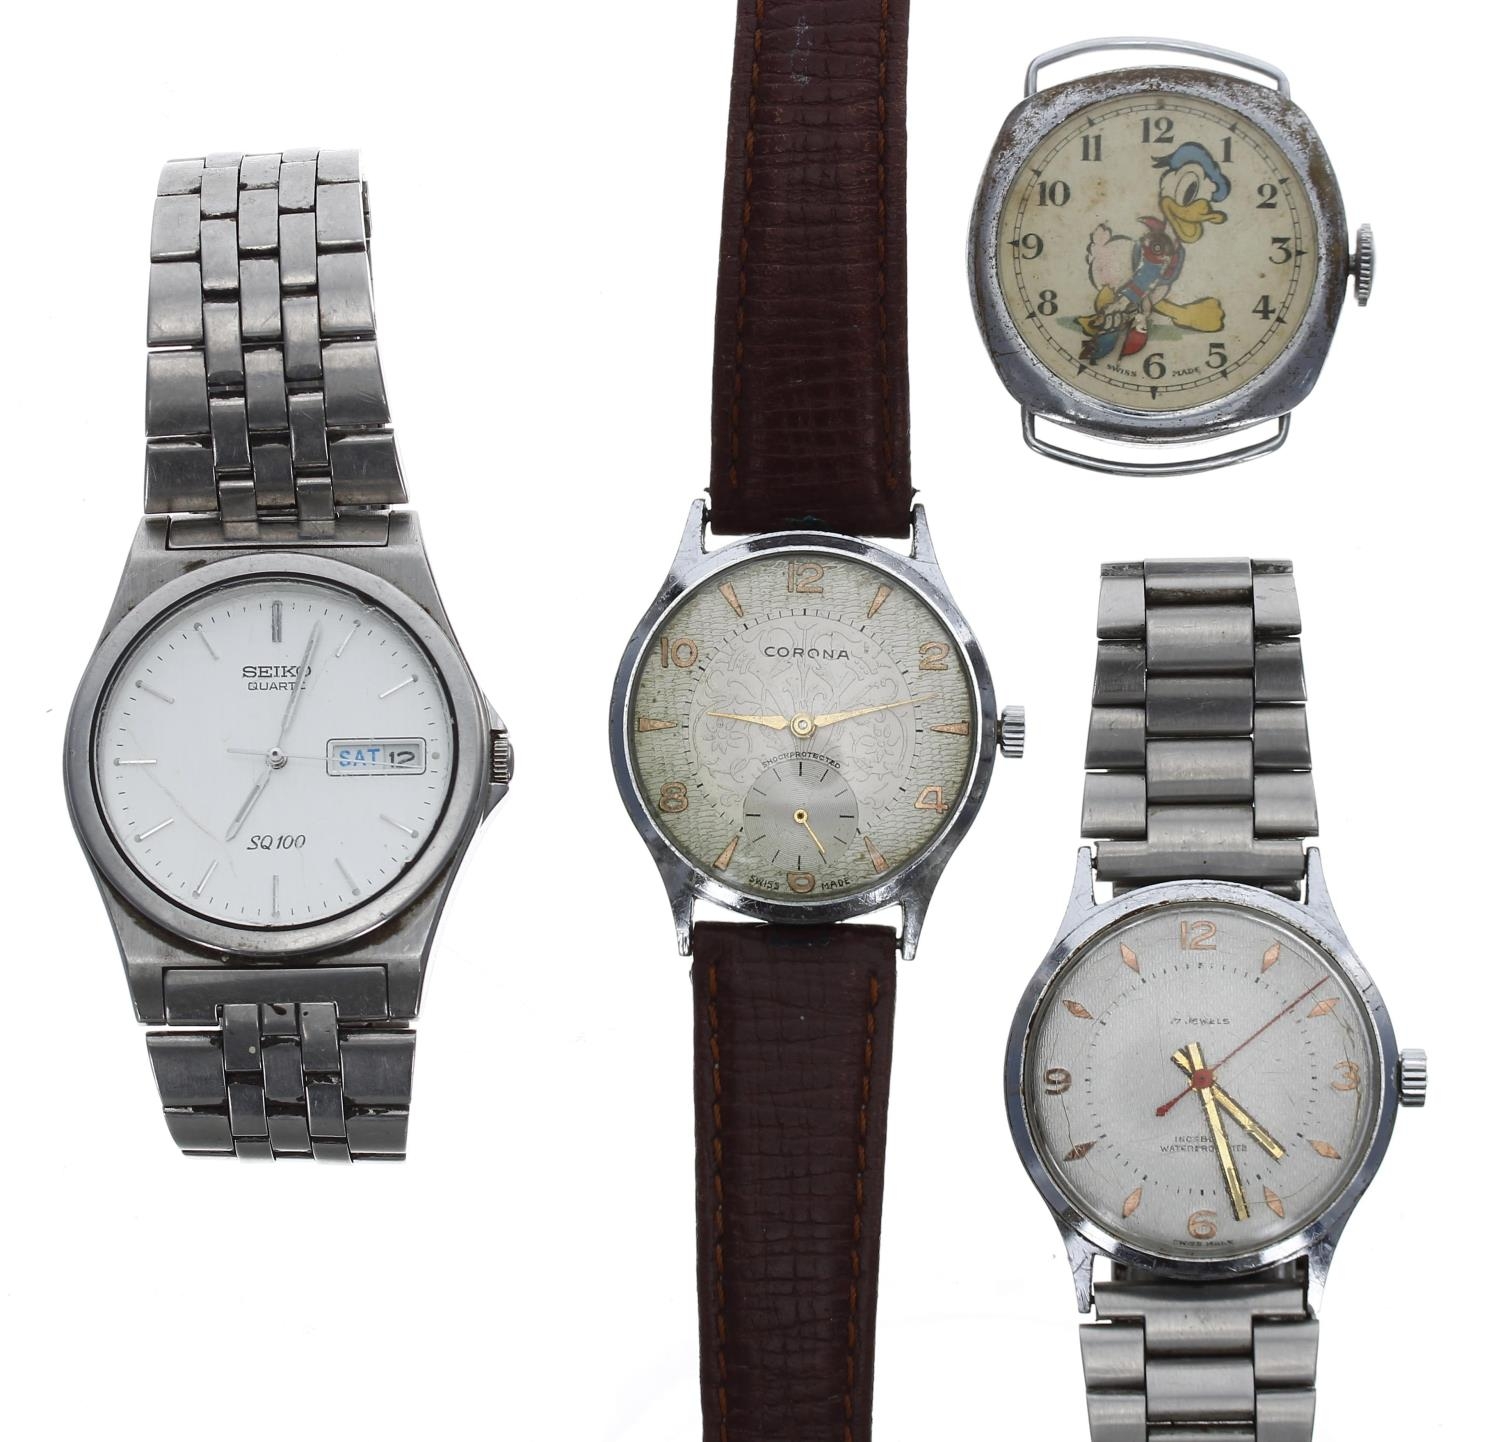 Four gentleman's wristwatches to include Corona, Seiko Quartz SQ100 and a 'Donald Duck' chrome cased